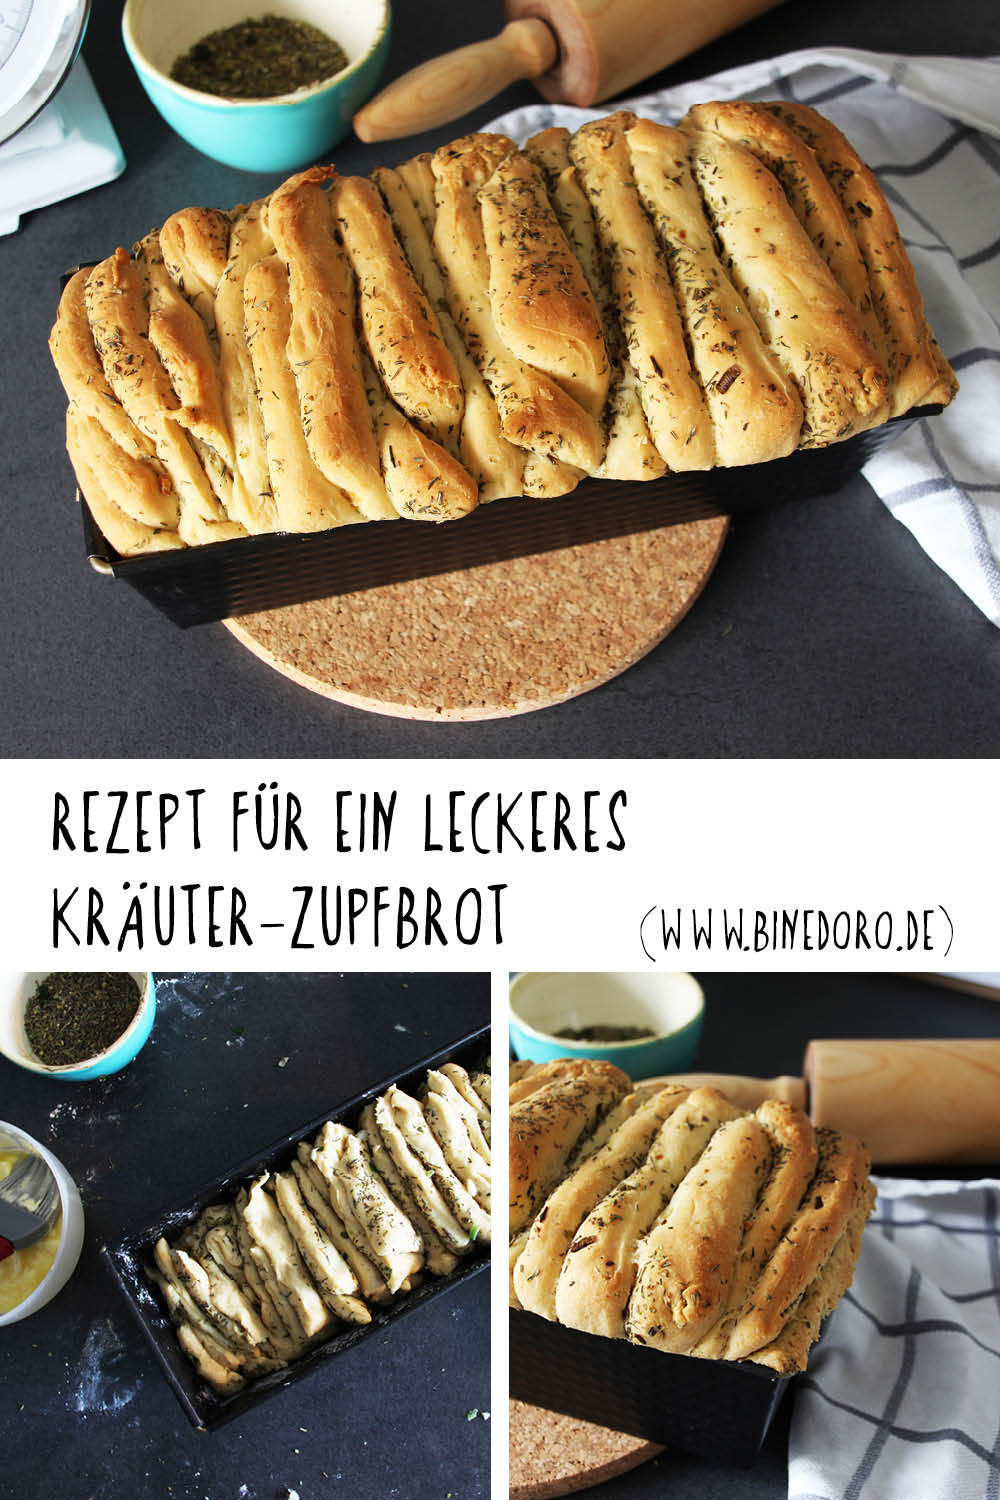 Kraeuter-Zupfbrot-Rezept-binedoro